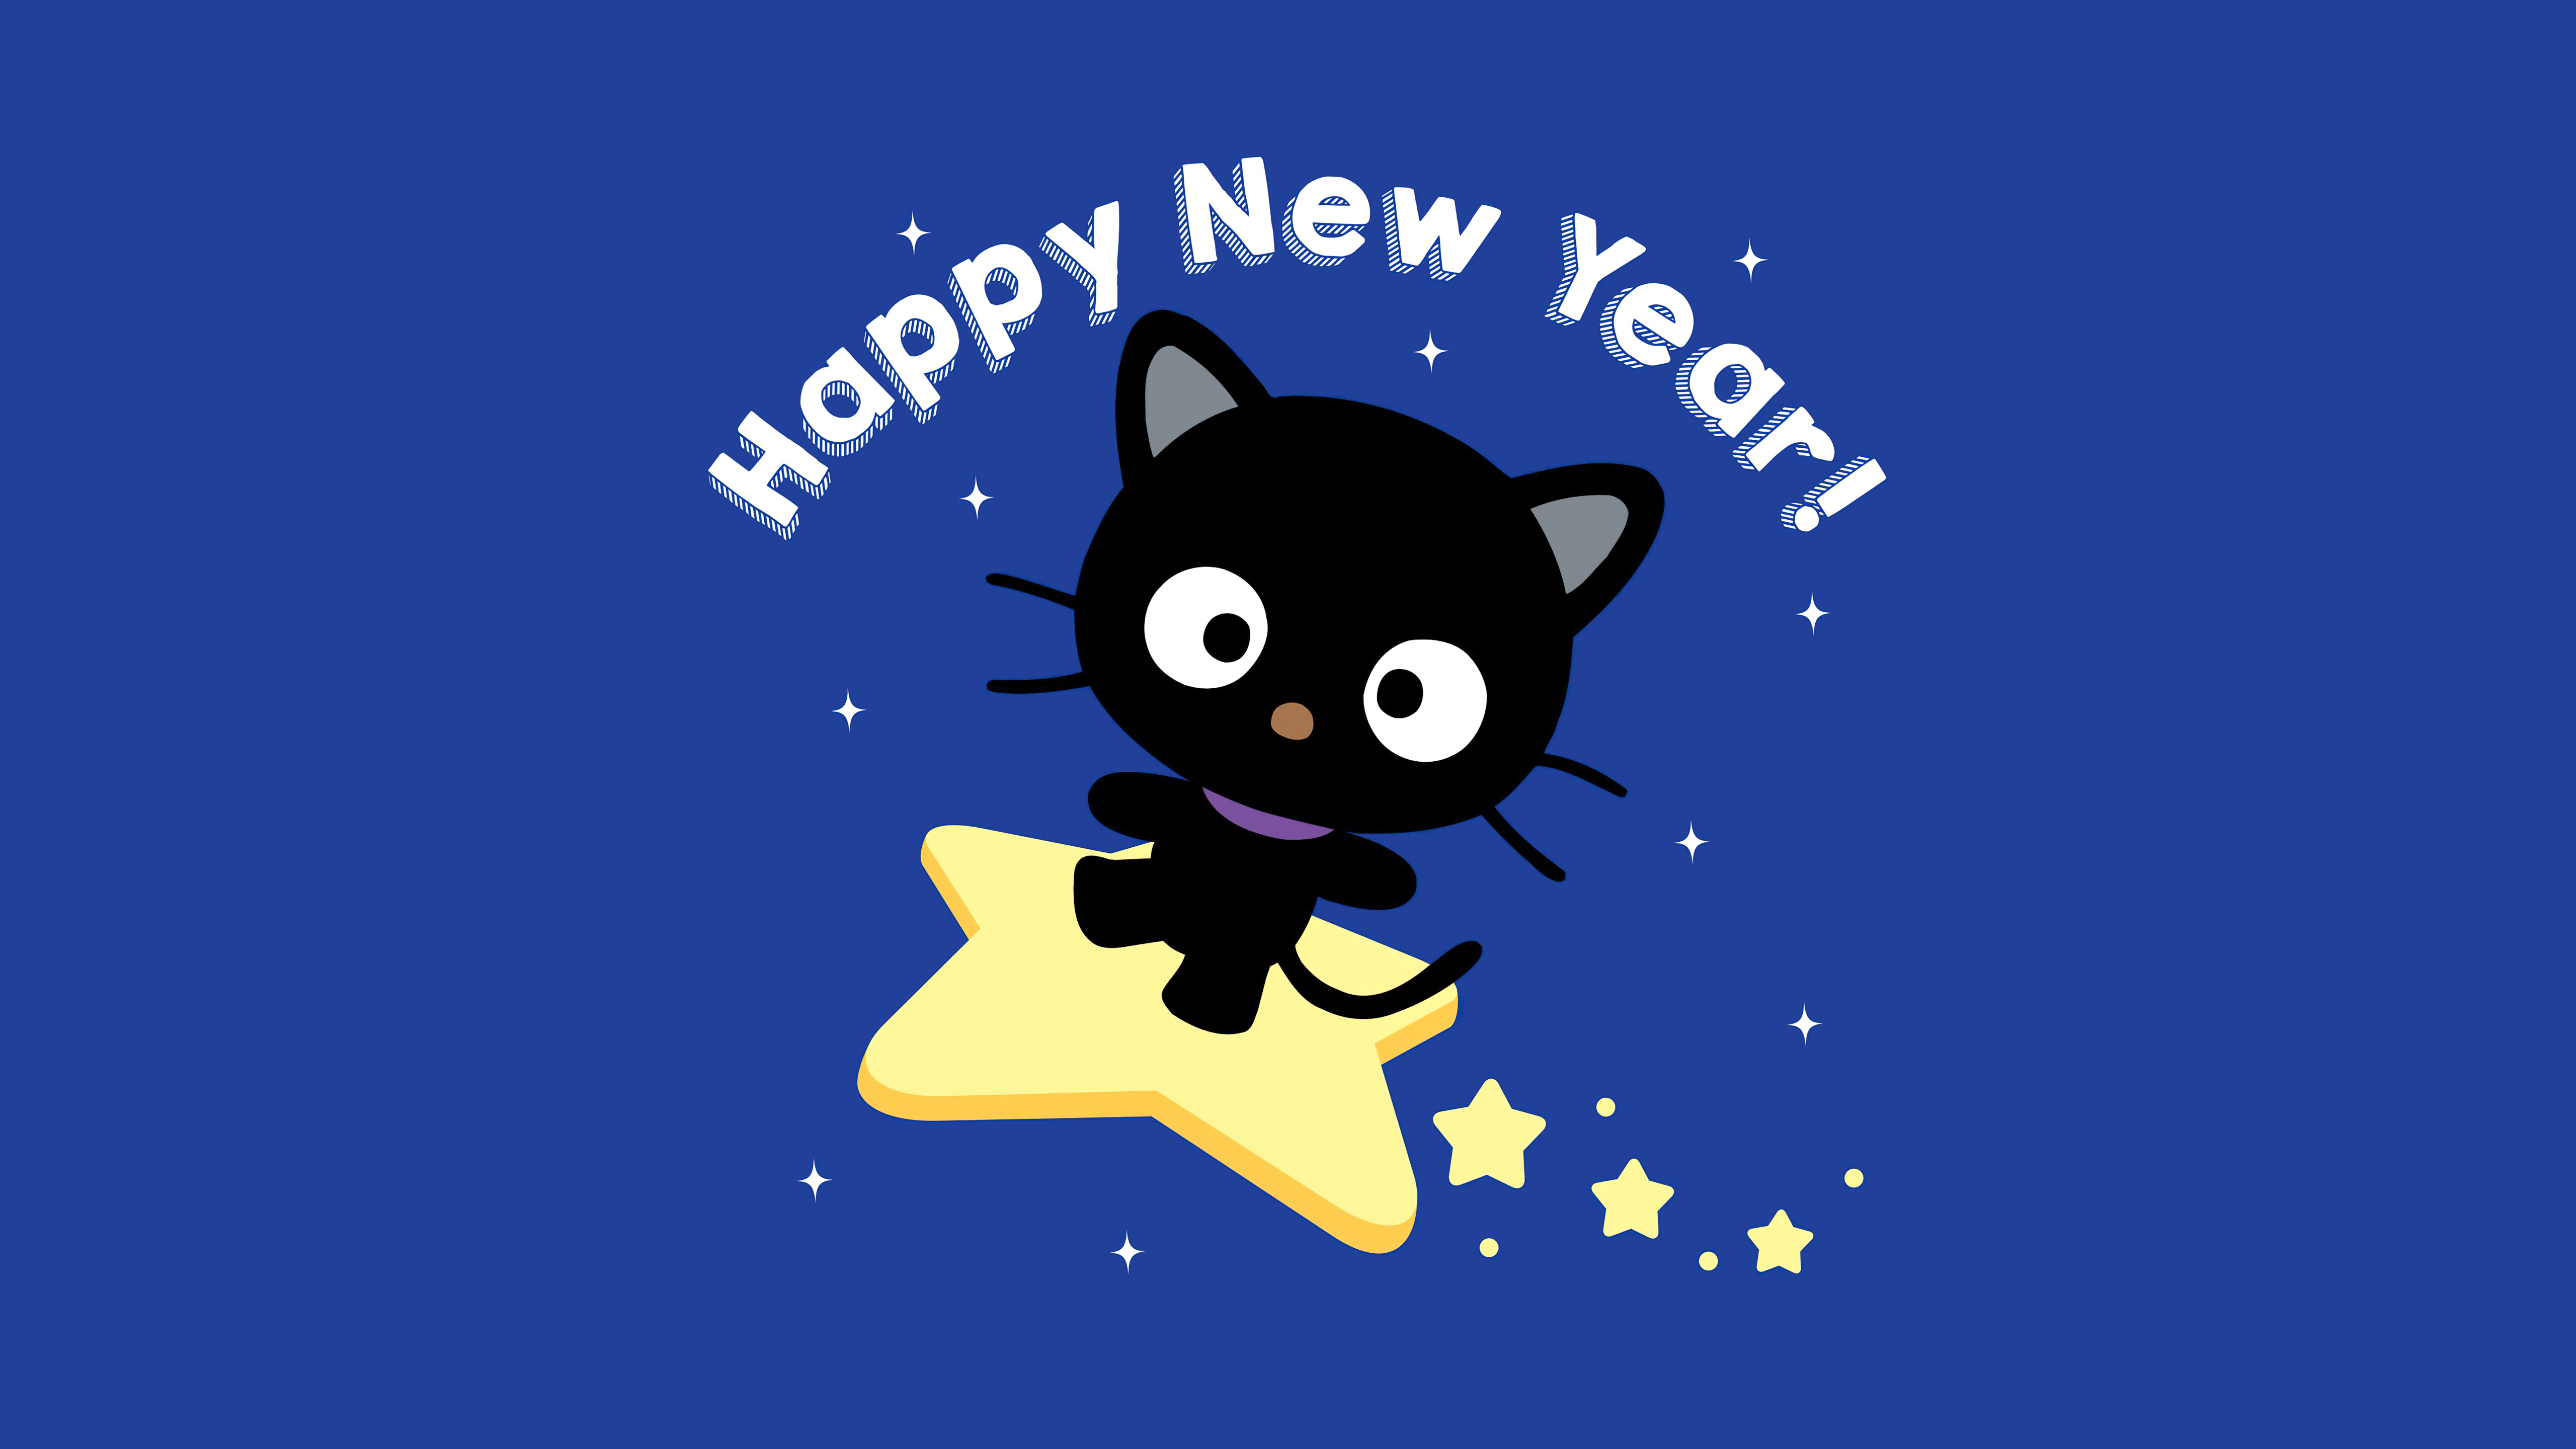 HD wallpaper, Cute Cartoon, 5K, Blue Background, Chococat, Happy New Year